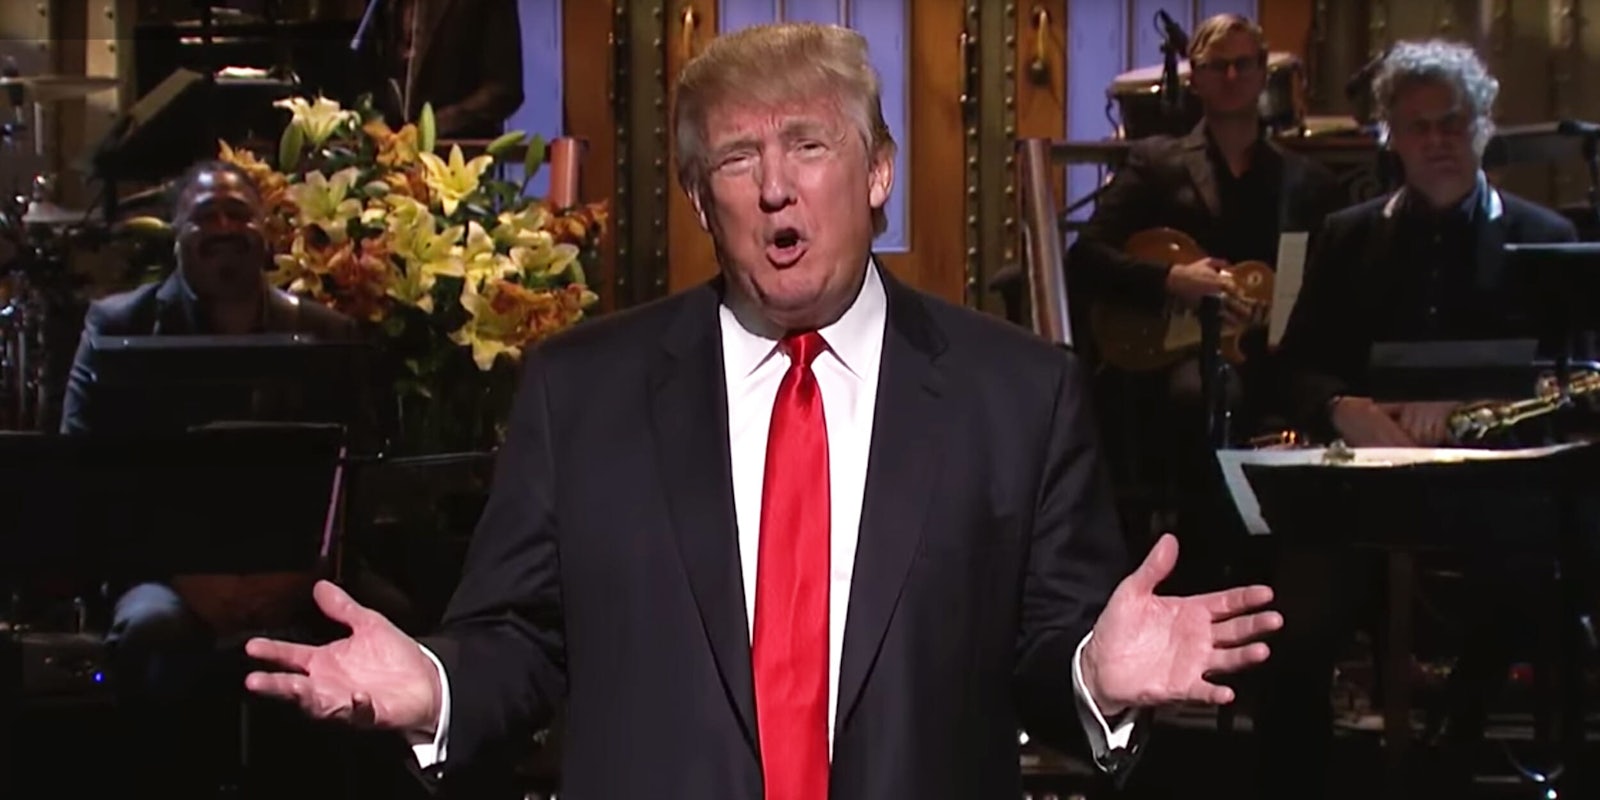 Trump hosting Saturday Night Live